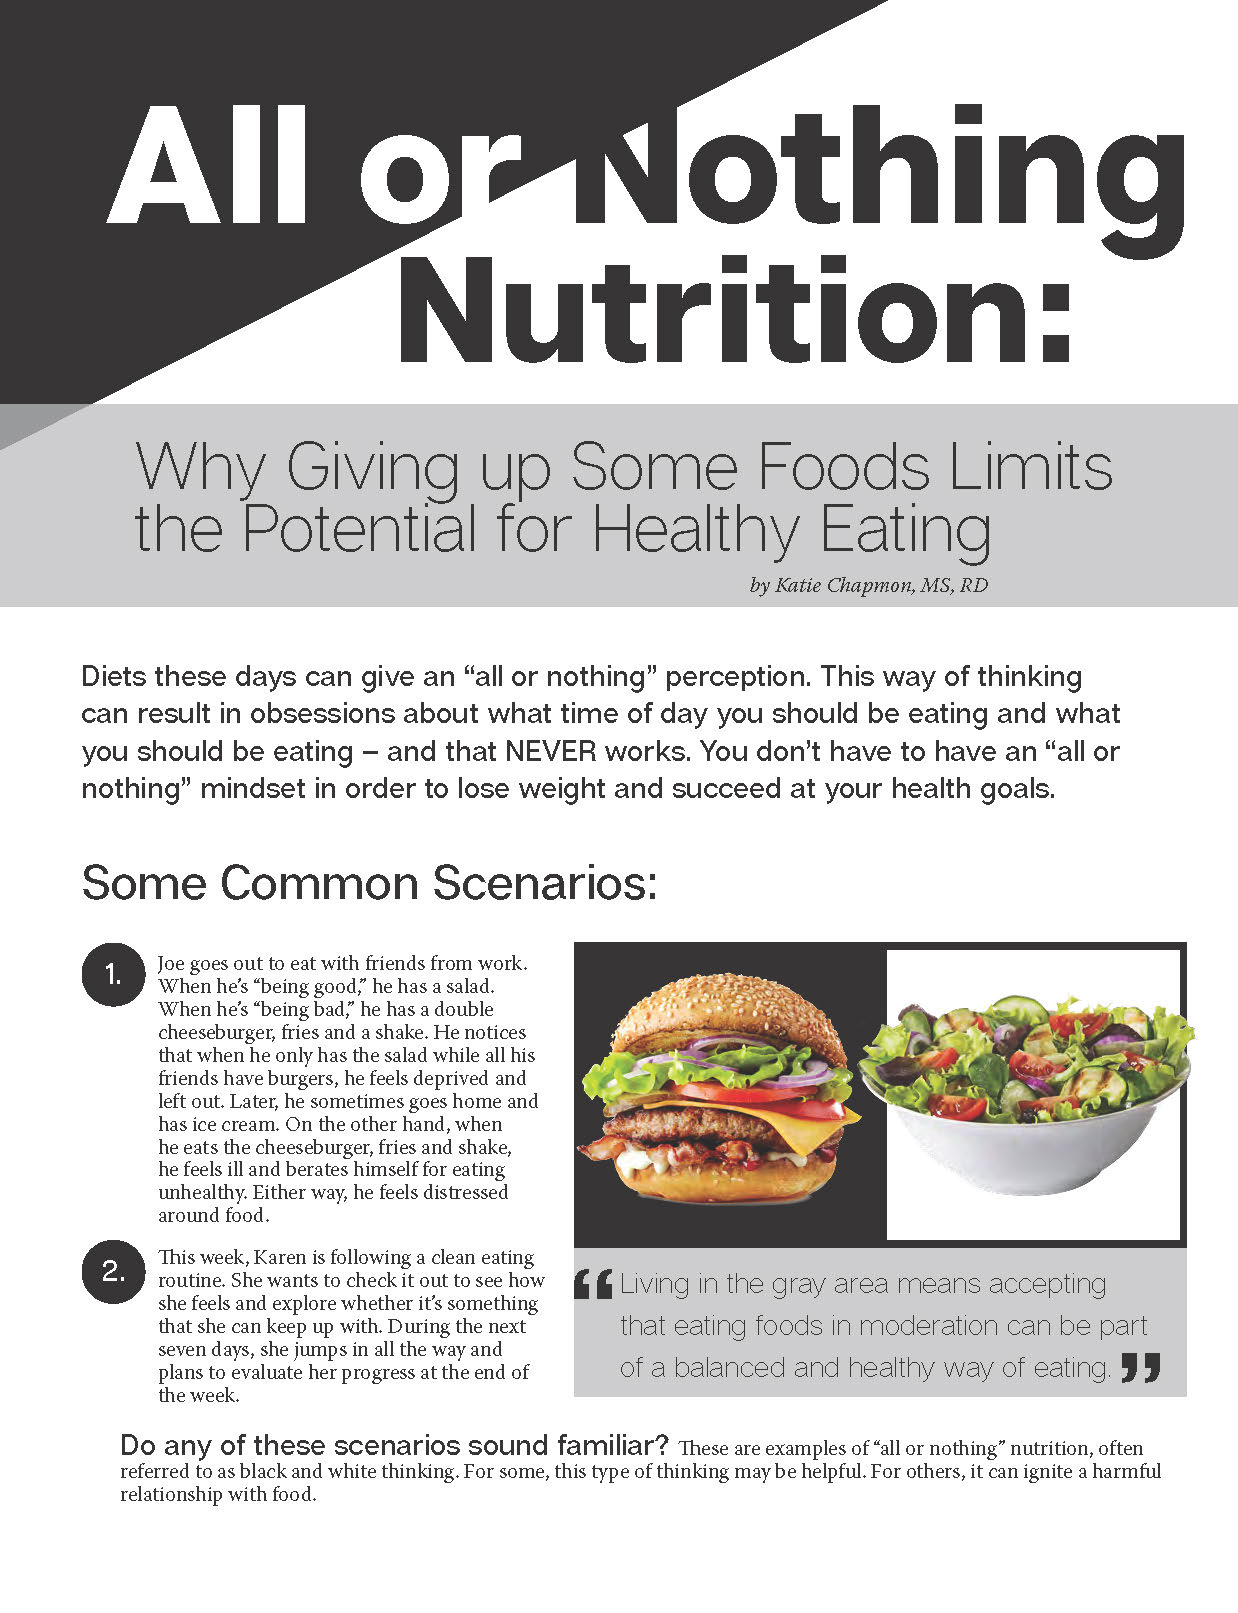 Exploring nutrition myths